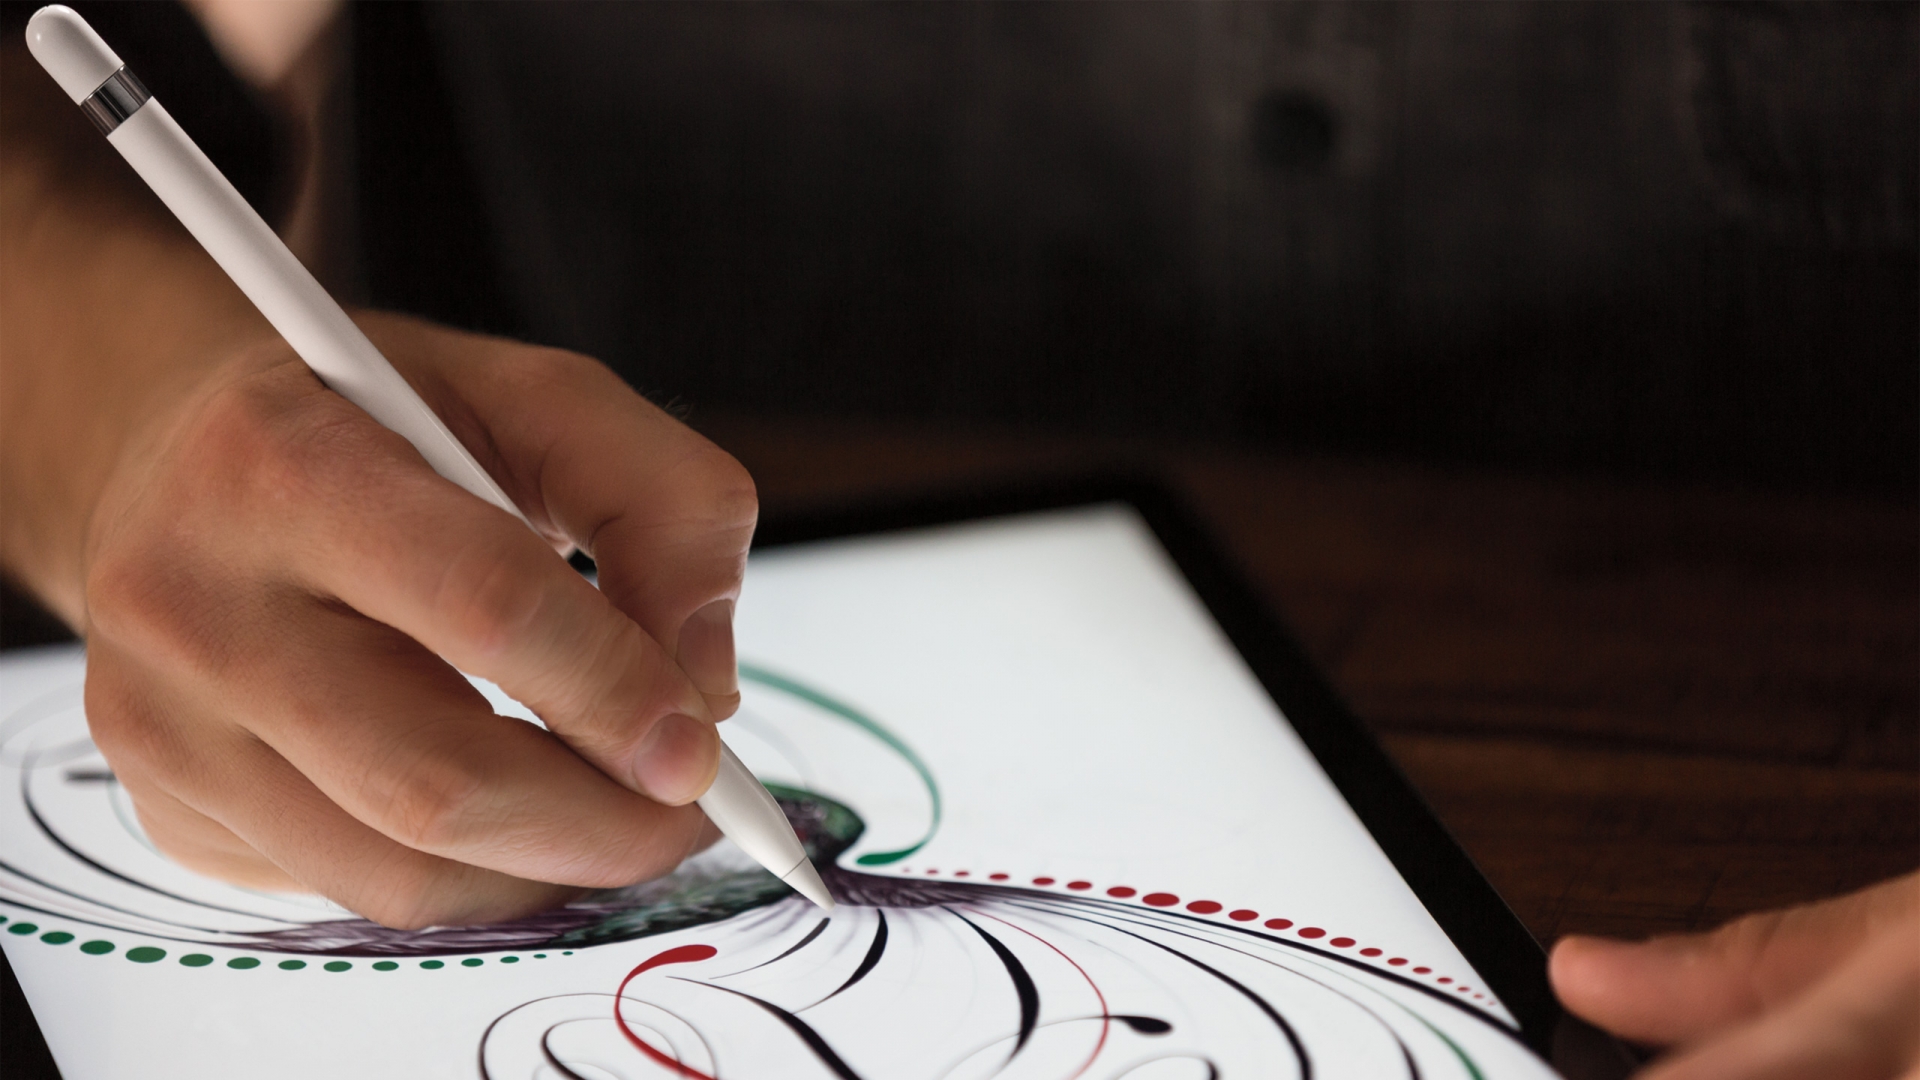 iPhone รุ่นใหม่จะรองรับการใช้งานร่วมกับ Apple Pencil ด้วย!